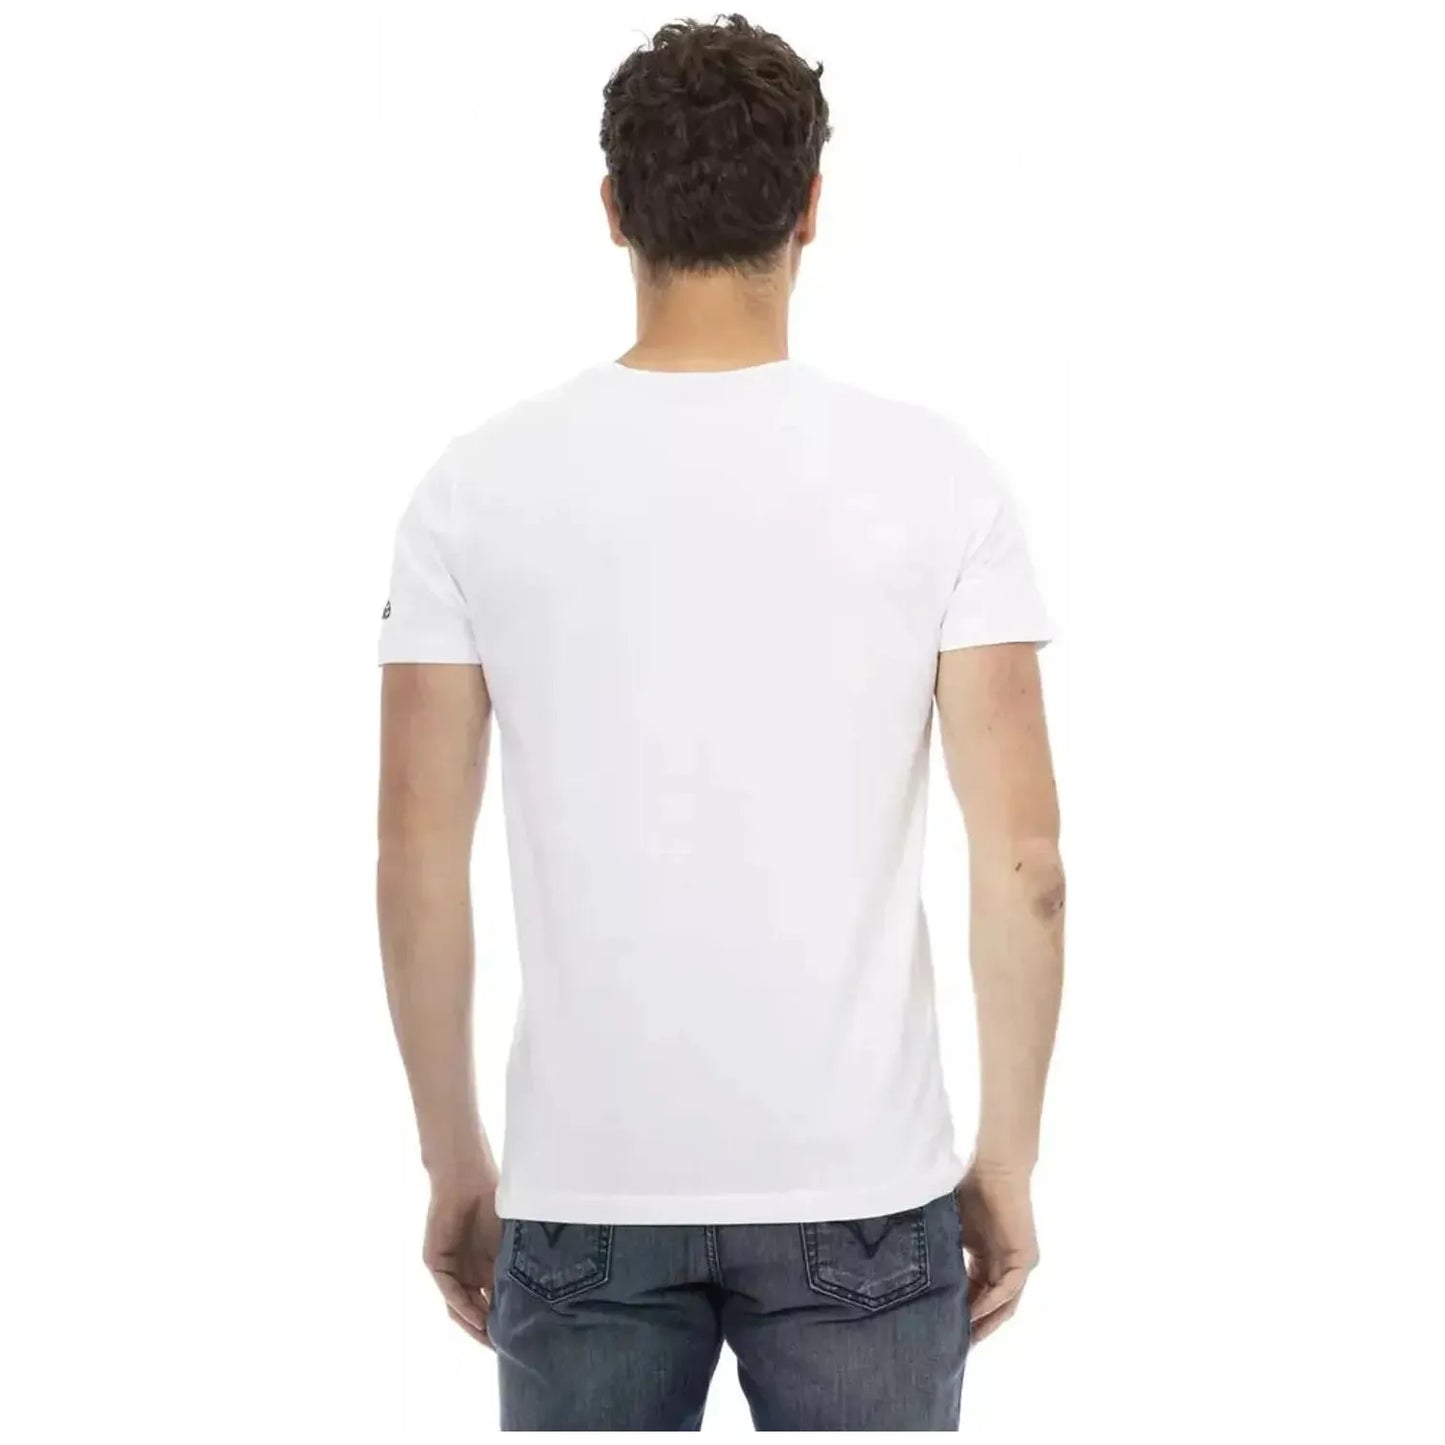 Trussardi Action Sleek White Round Neck Tee with Front Print white-cotton-t-shirt-113